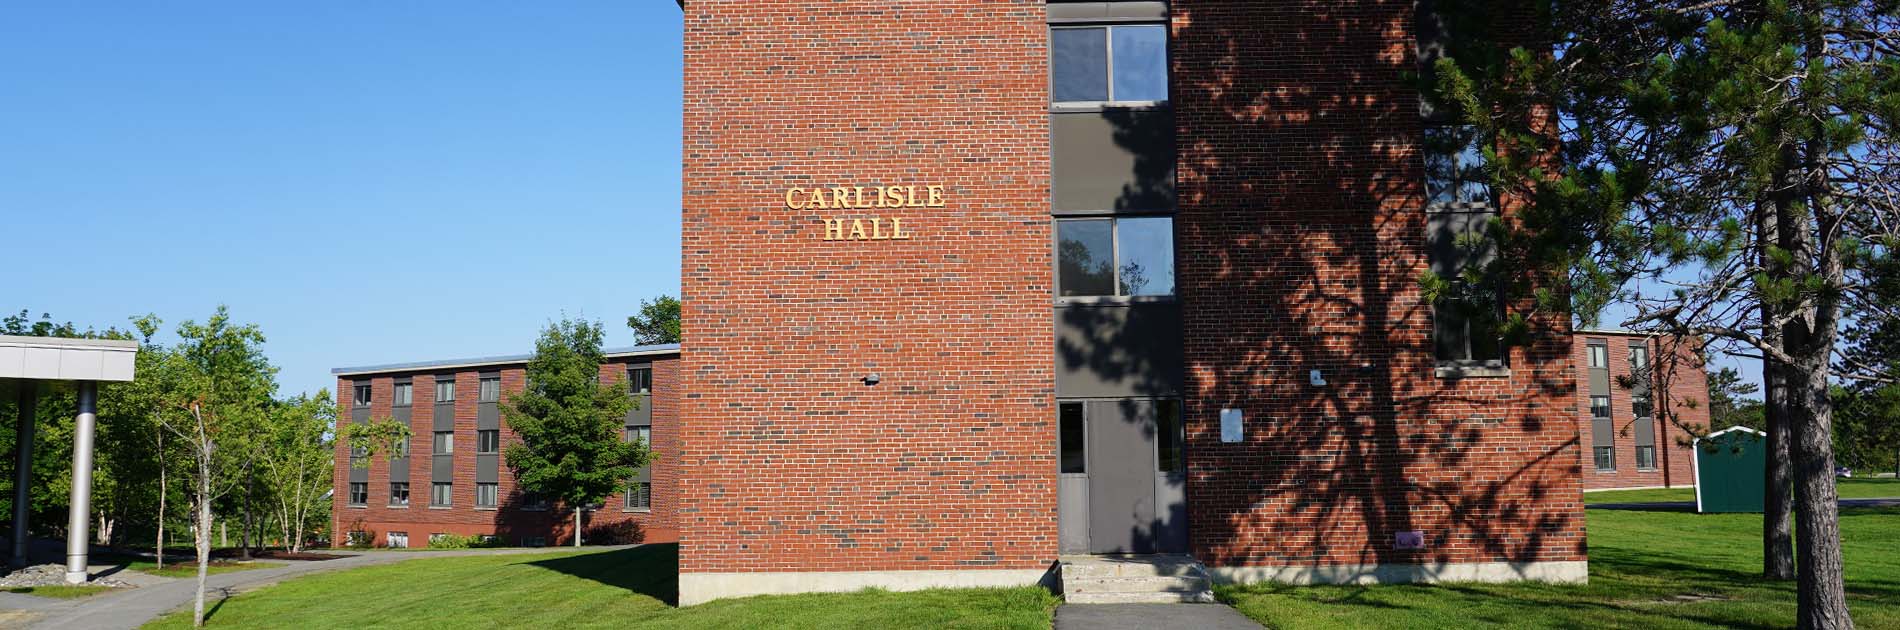 Carlisle Hall on the campus of Husson University